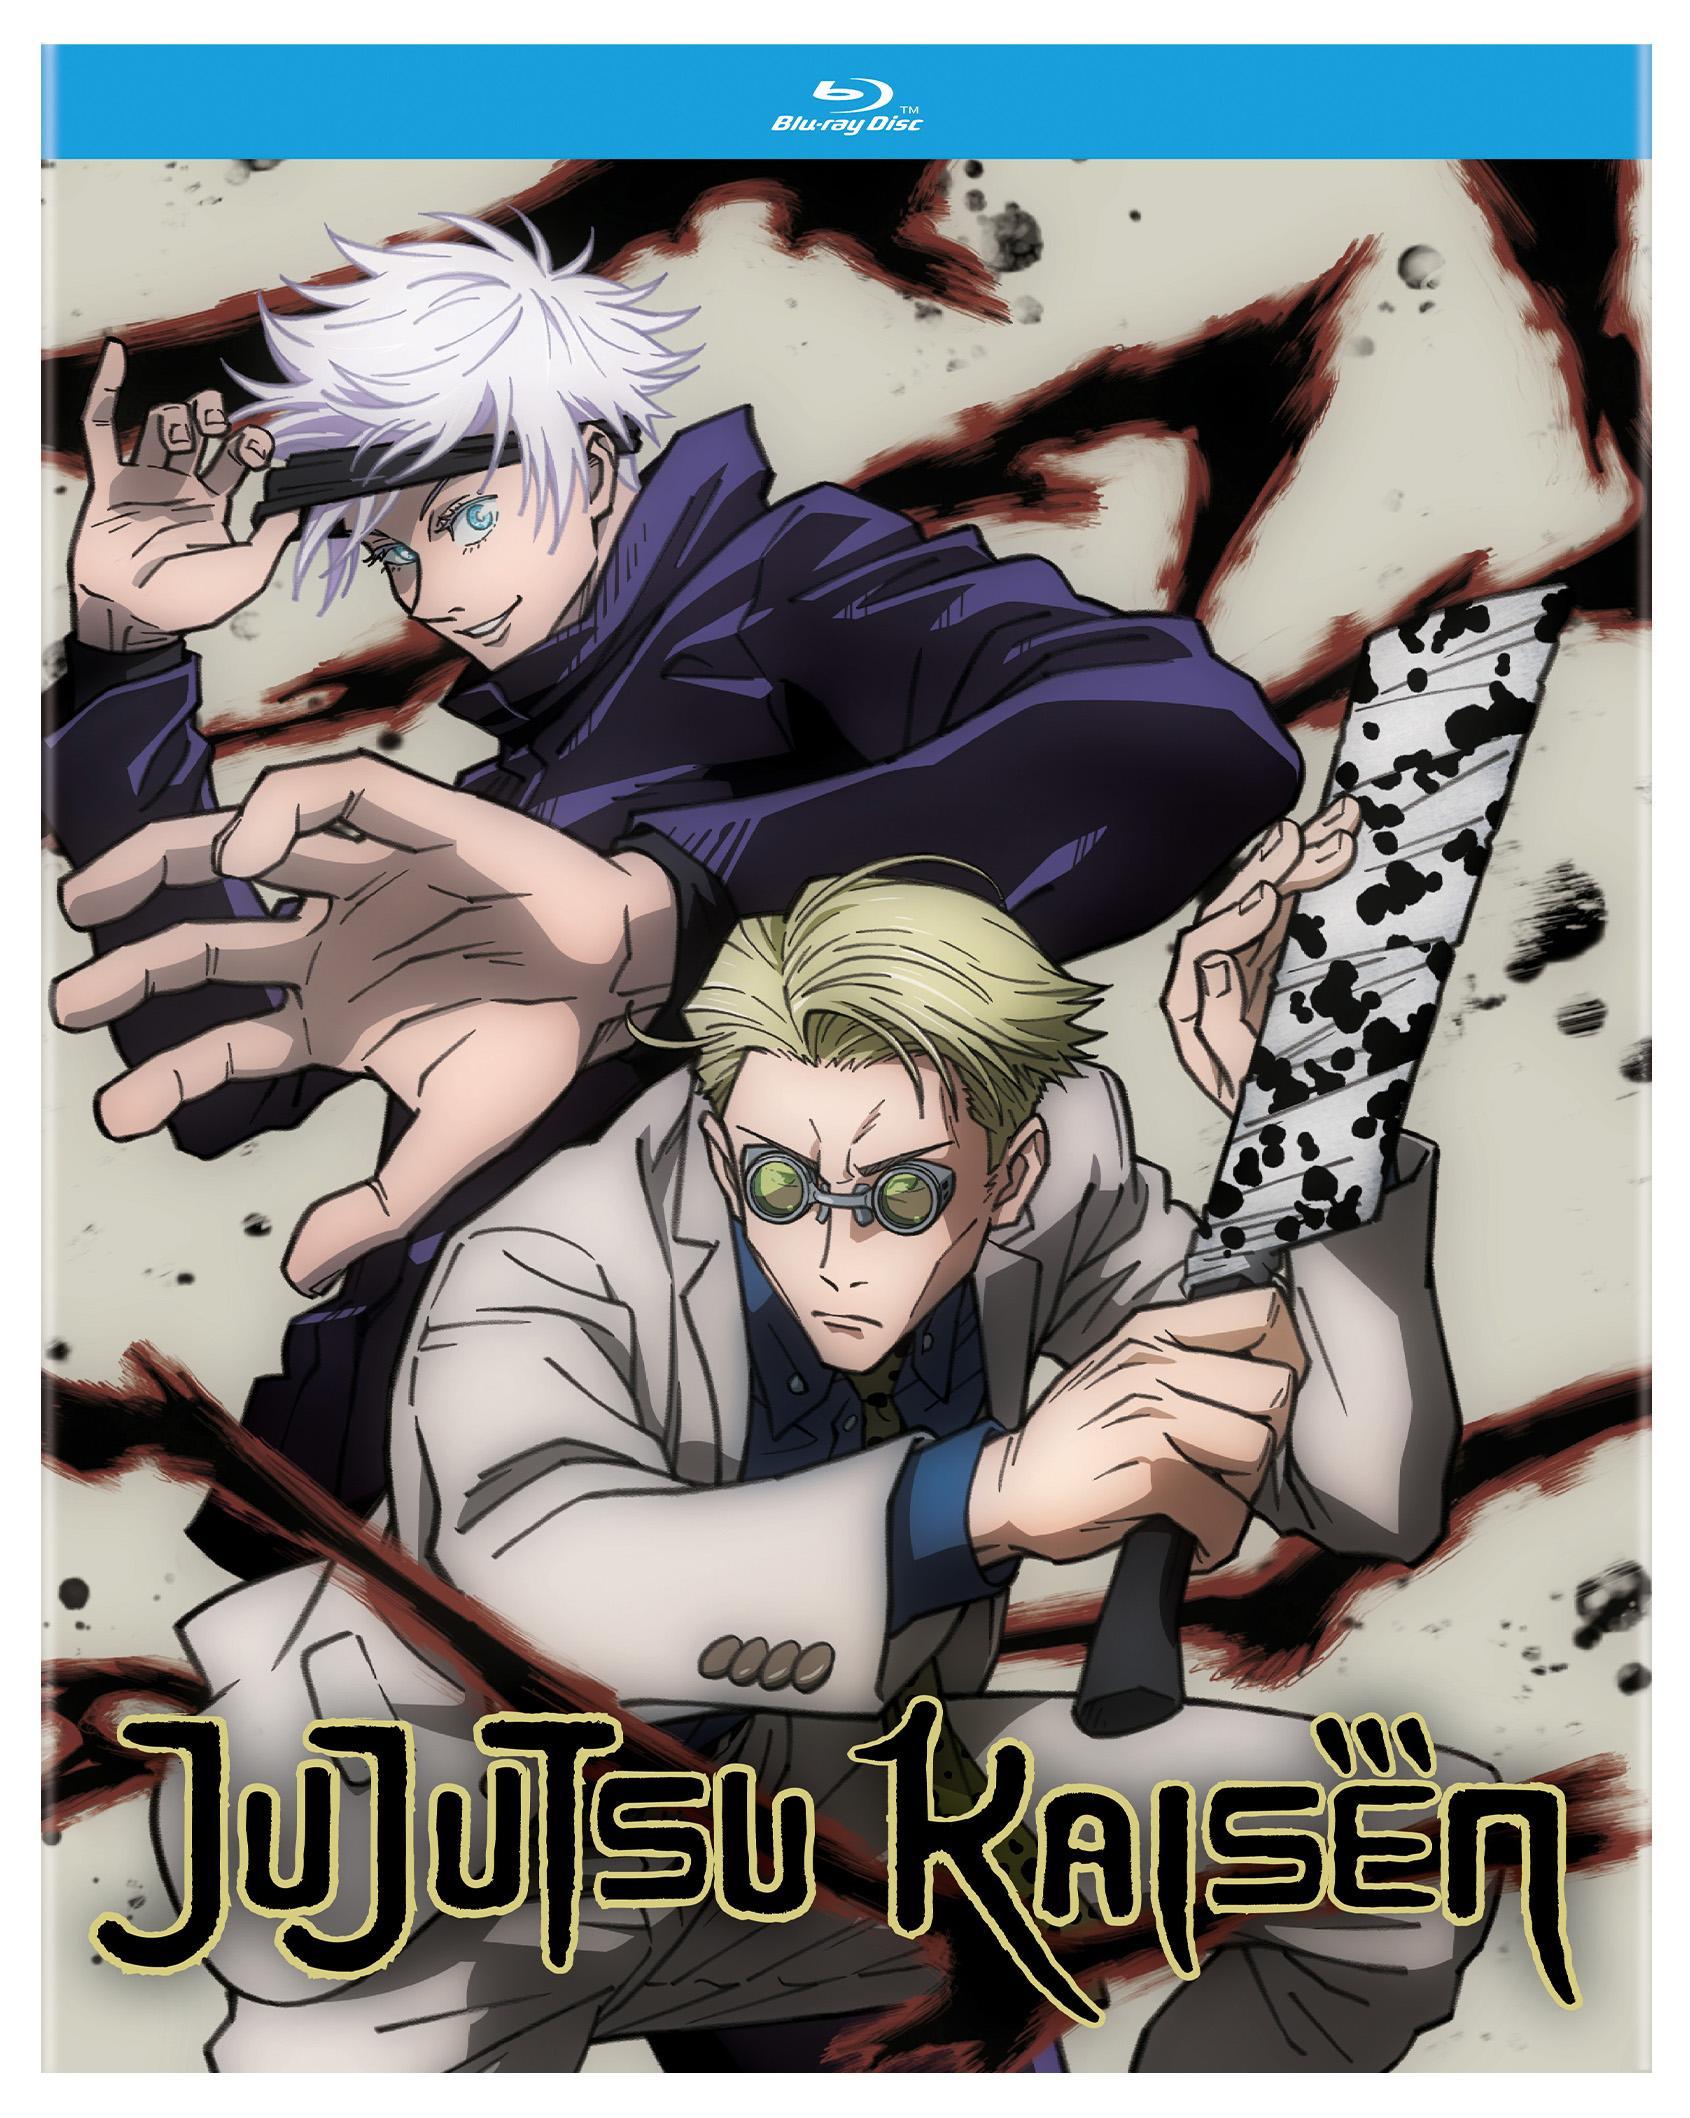 Jujutsu Kaisen: Season 1 Part 2 - Blu-ray